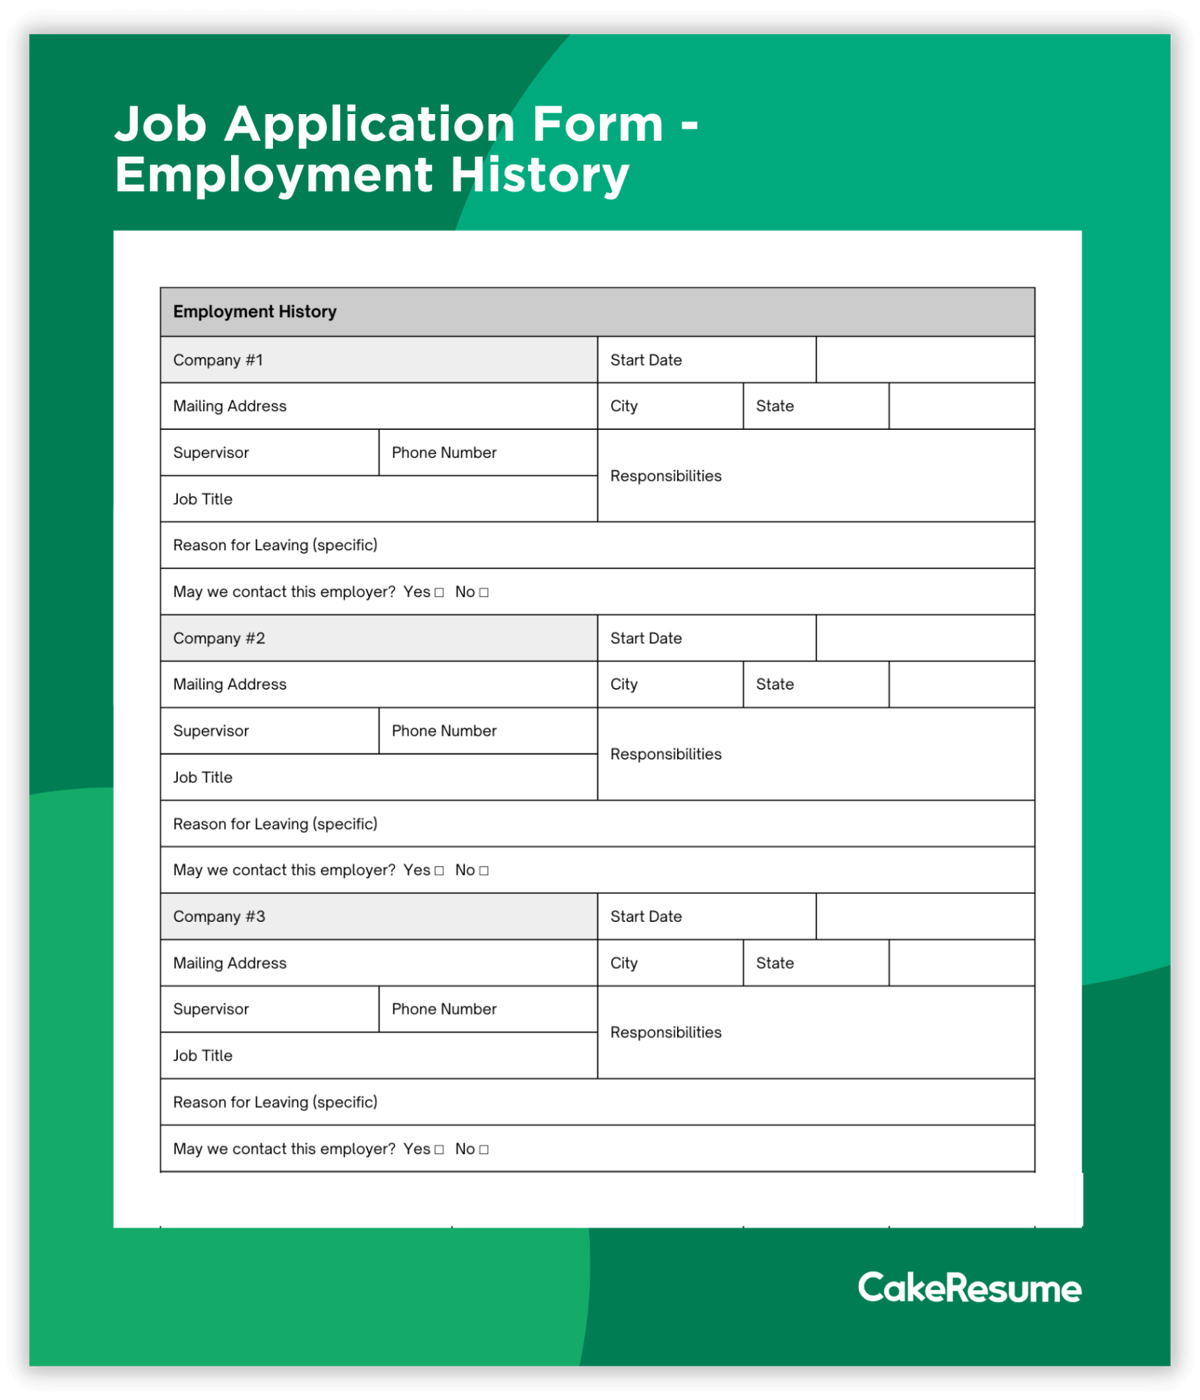 Employment History on a Job Application Form